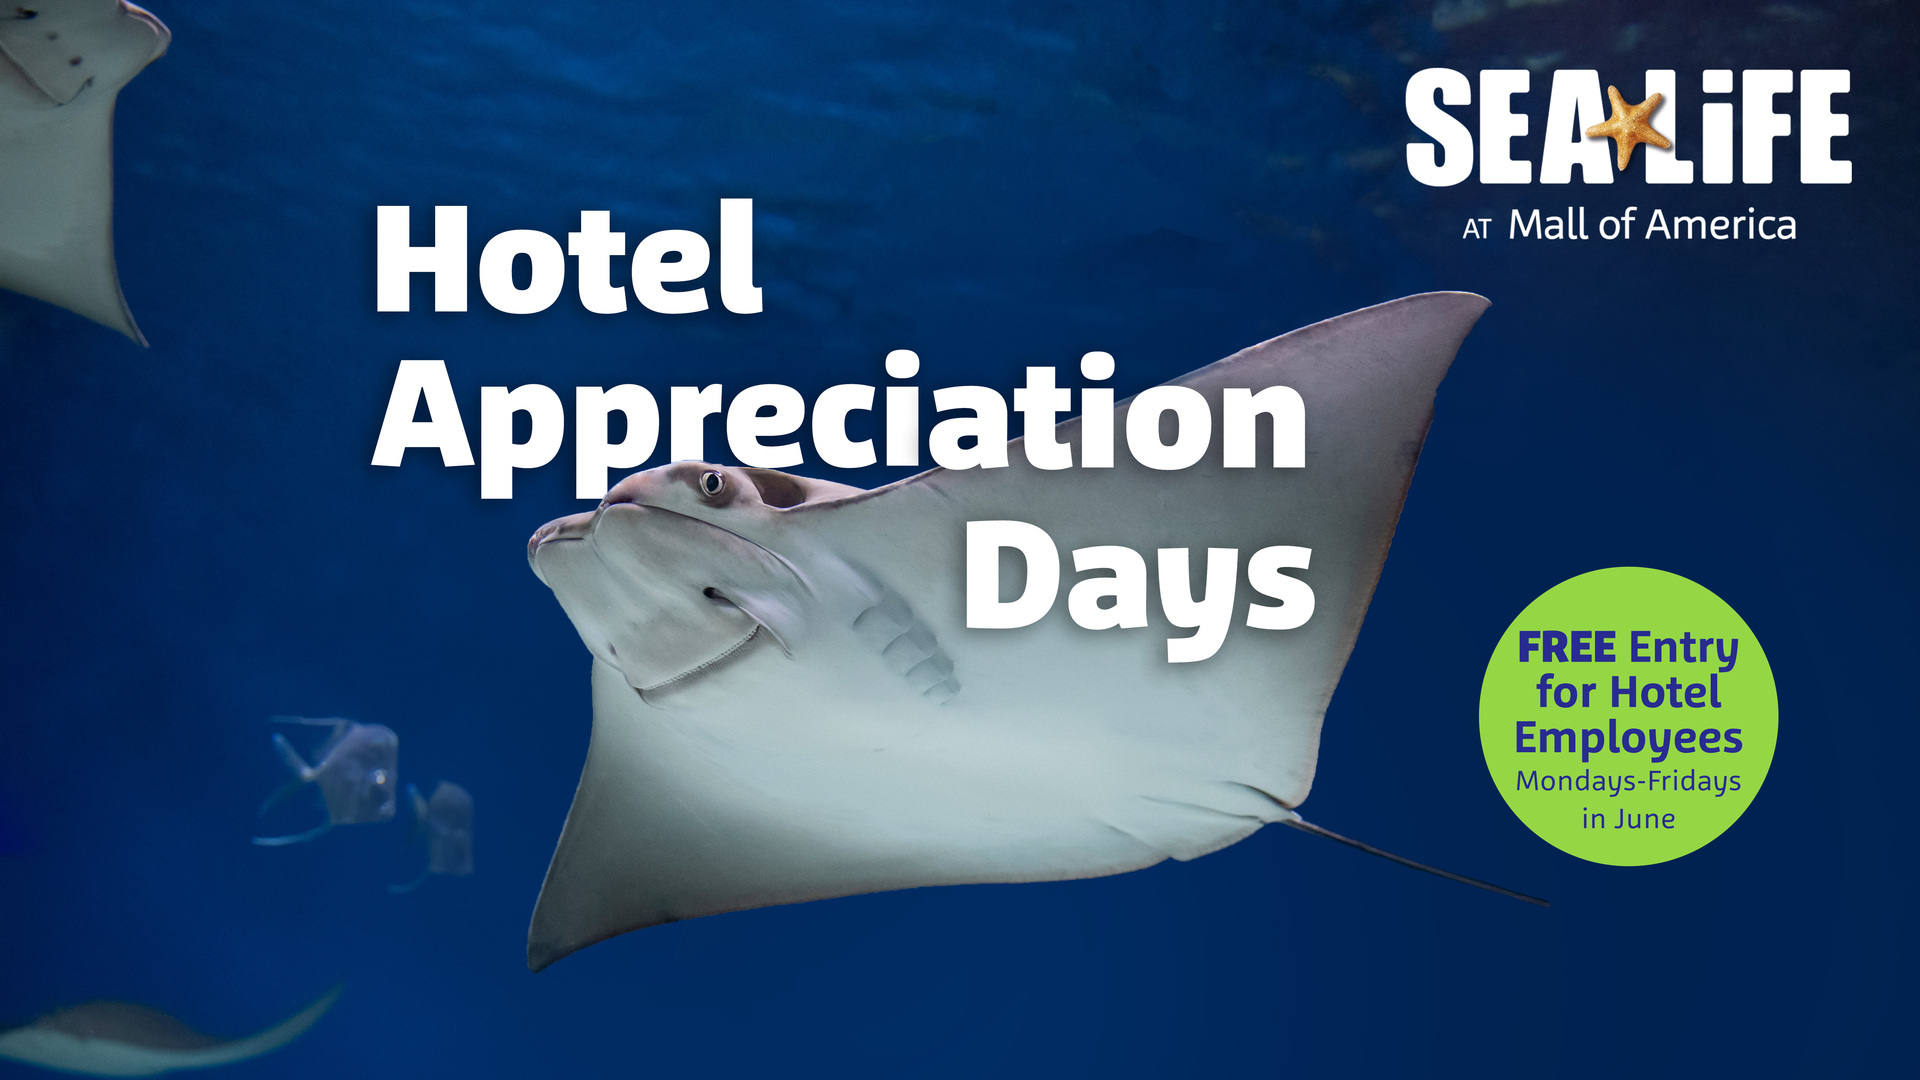 Hotel Appreciation Days at SEA LIFE, Bloomington, Minnesota, United States